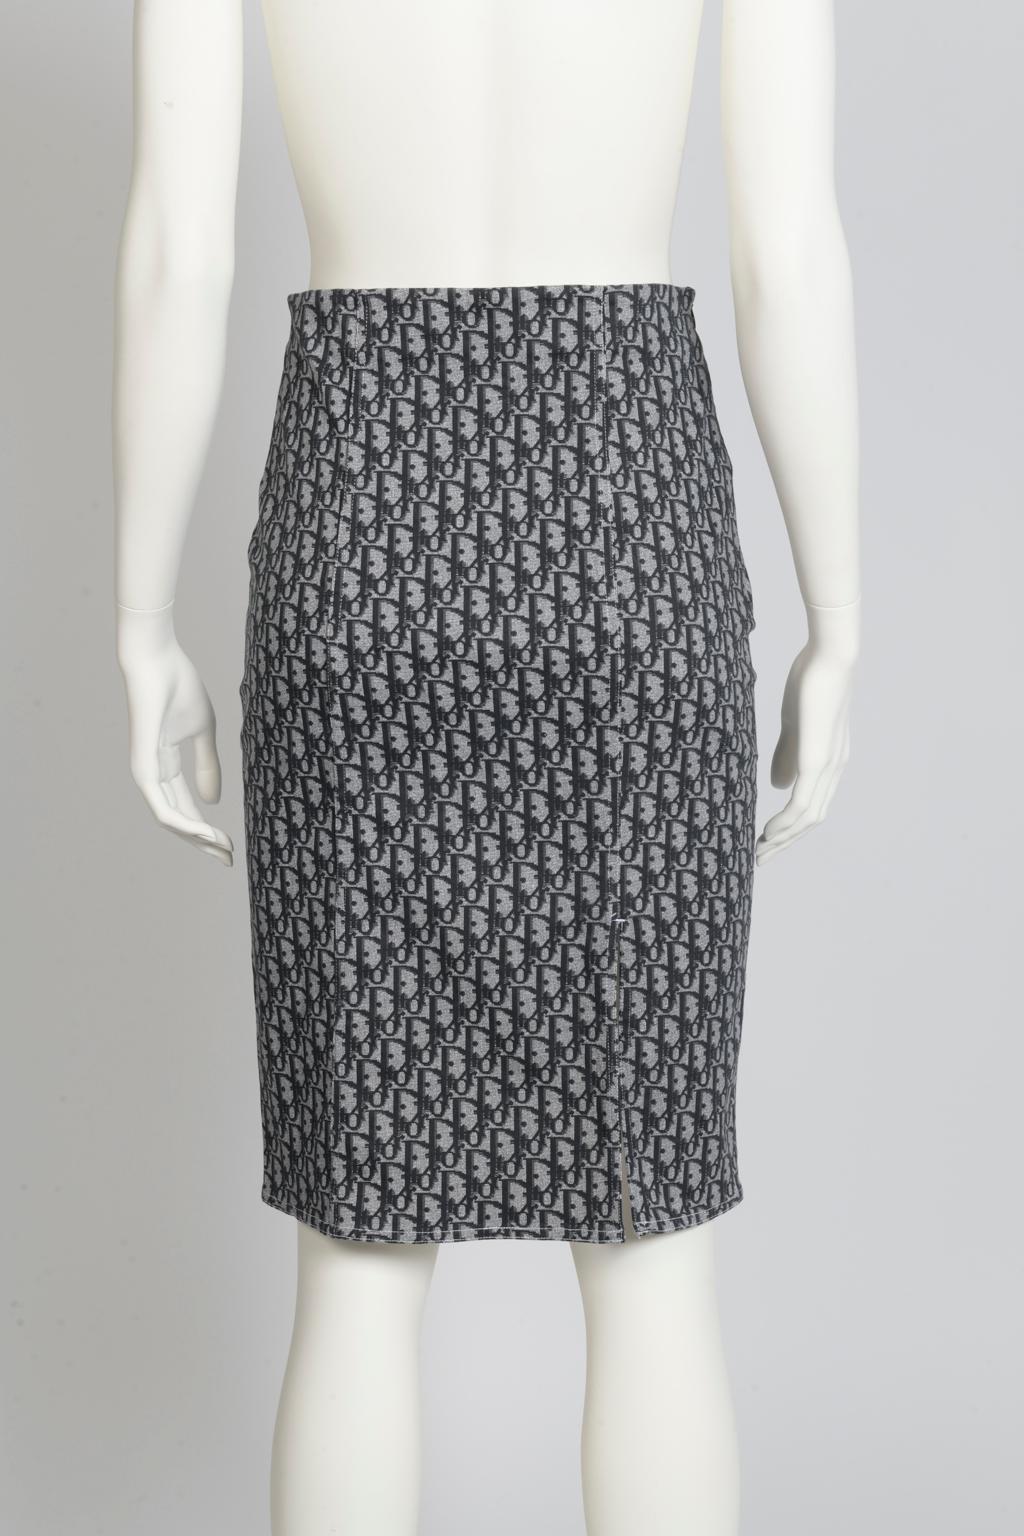 Christian Dior By John Galliano Dior Oblique Pencil Skirt 2